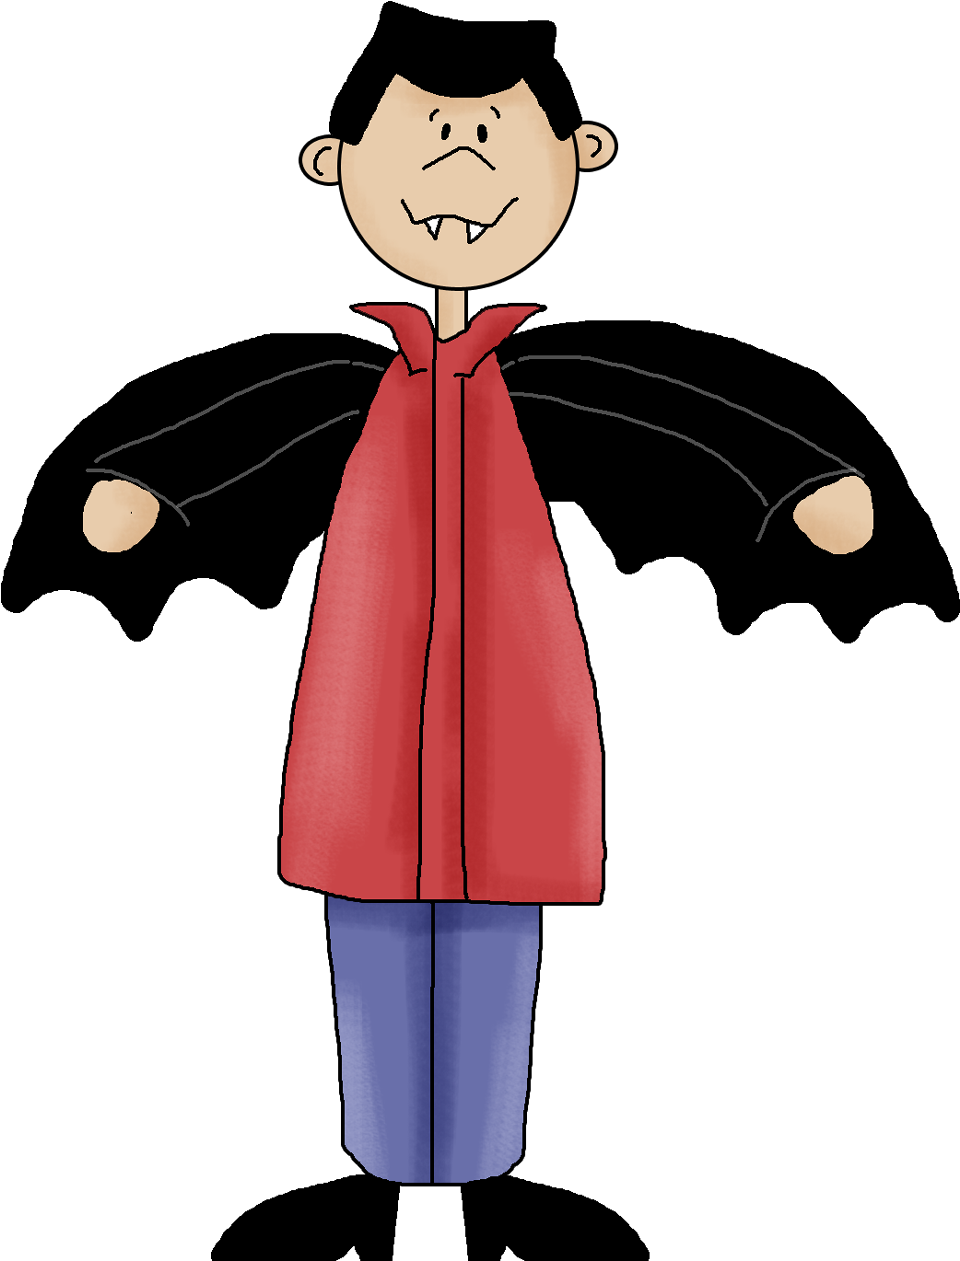 A Cartoon Of A Boy Wearing A Red Coat